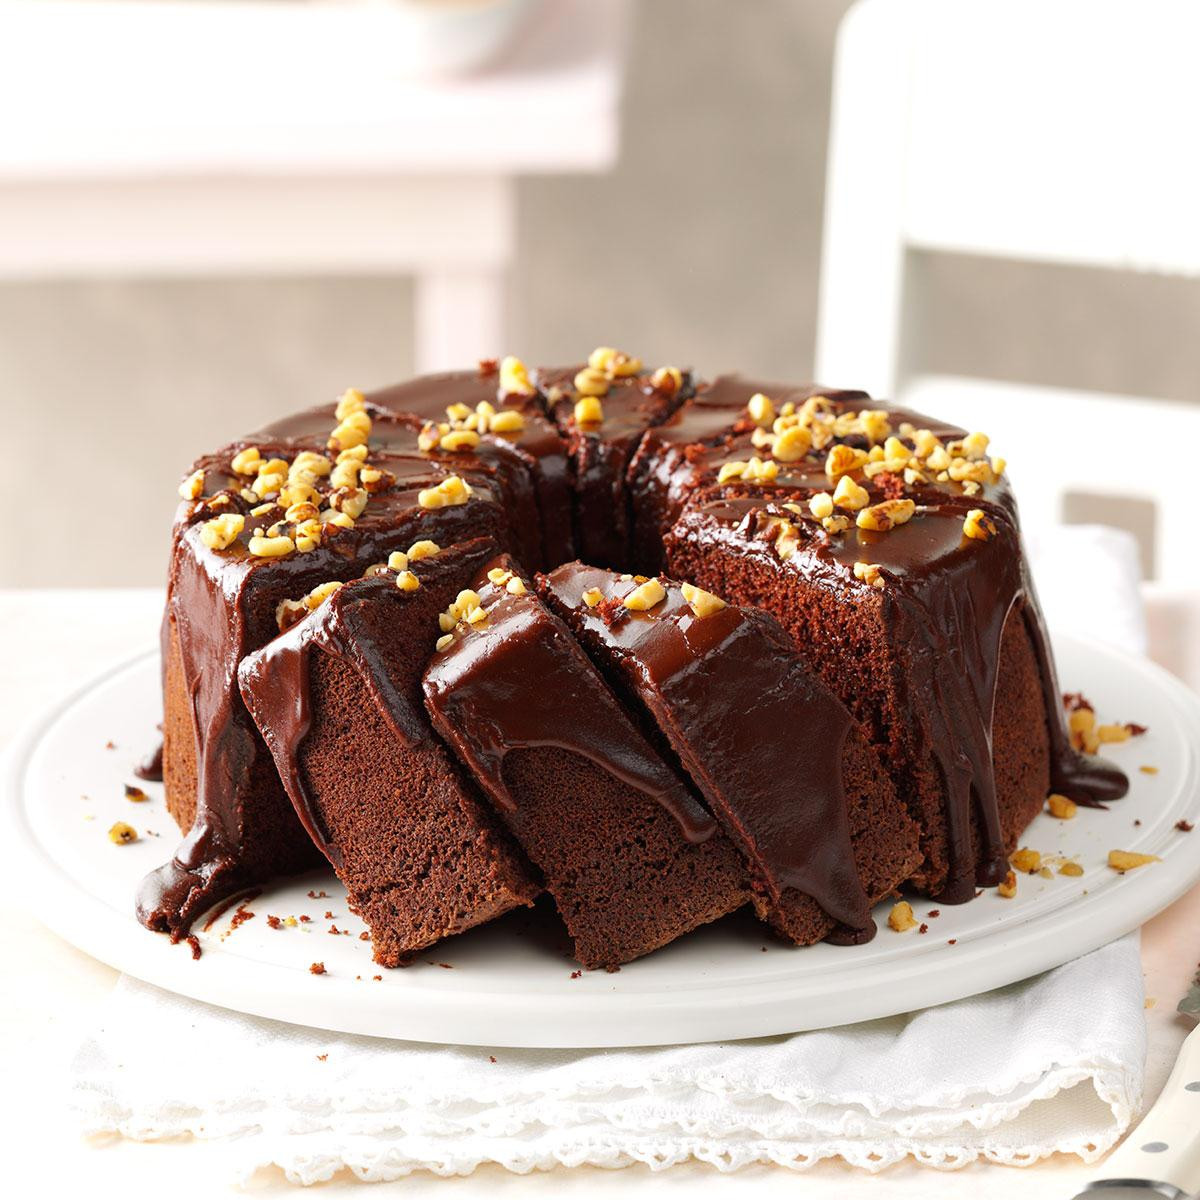 Taste Of Home Chocolate Cake
 Chocolate Chiffon Cake Recipe